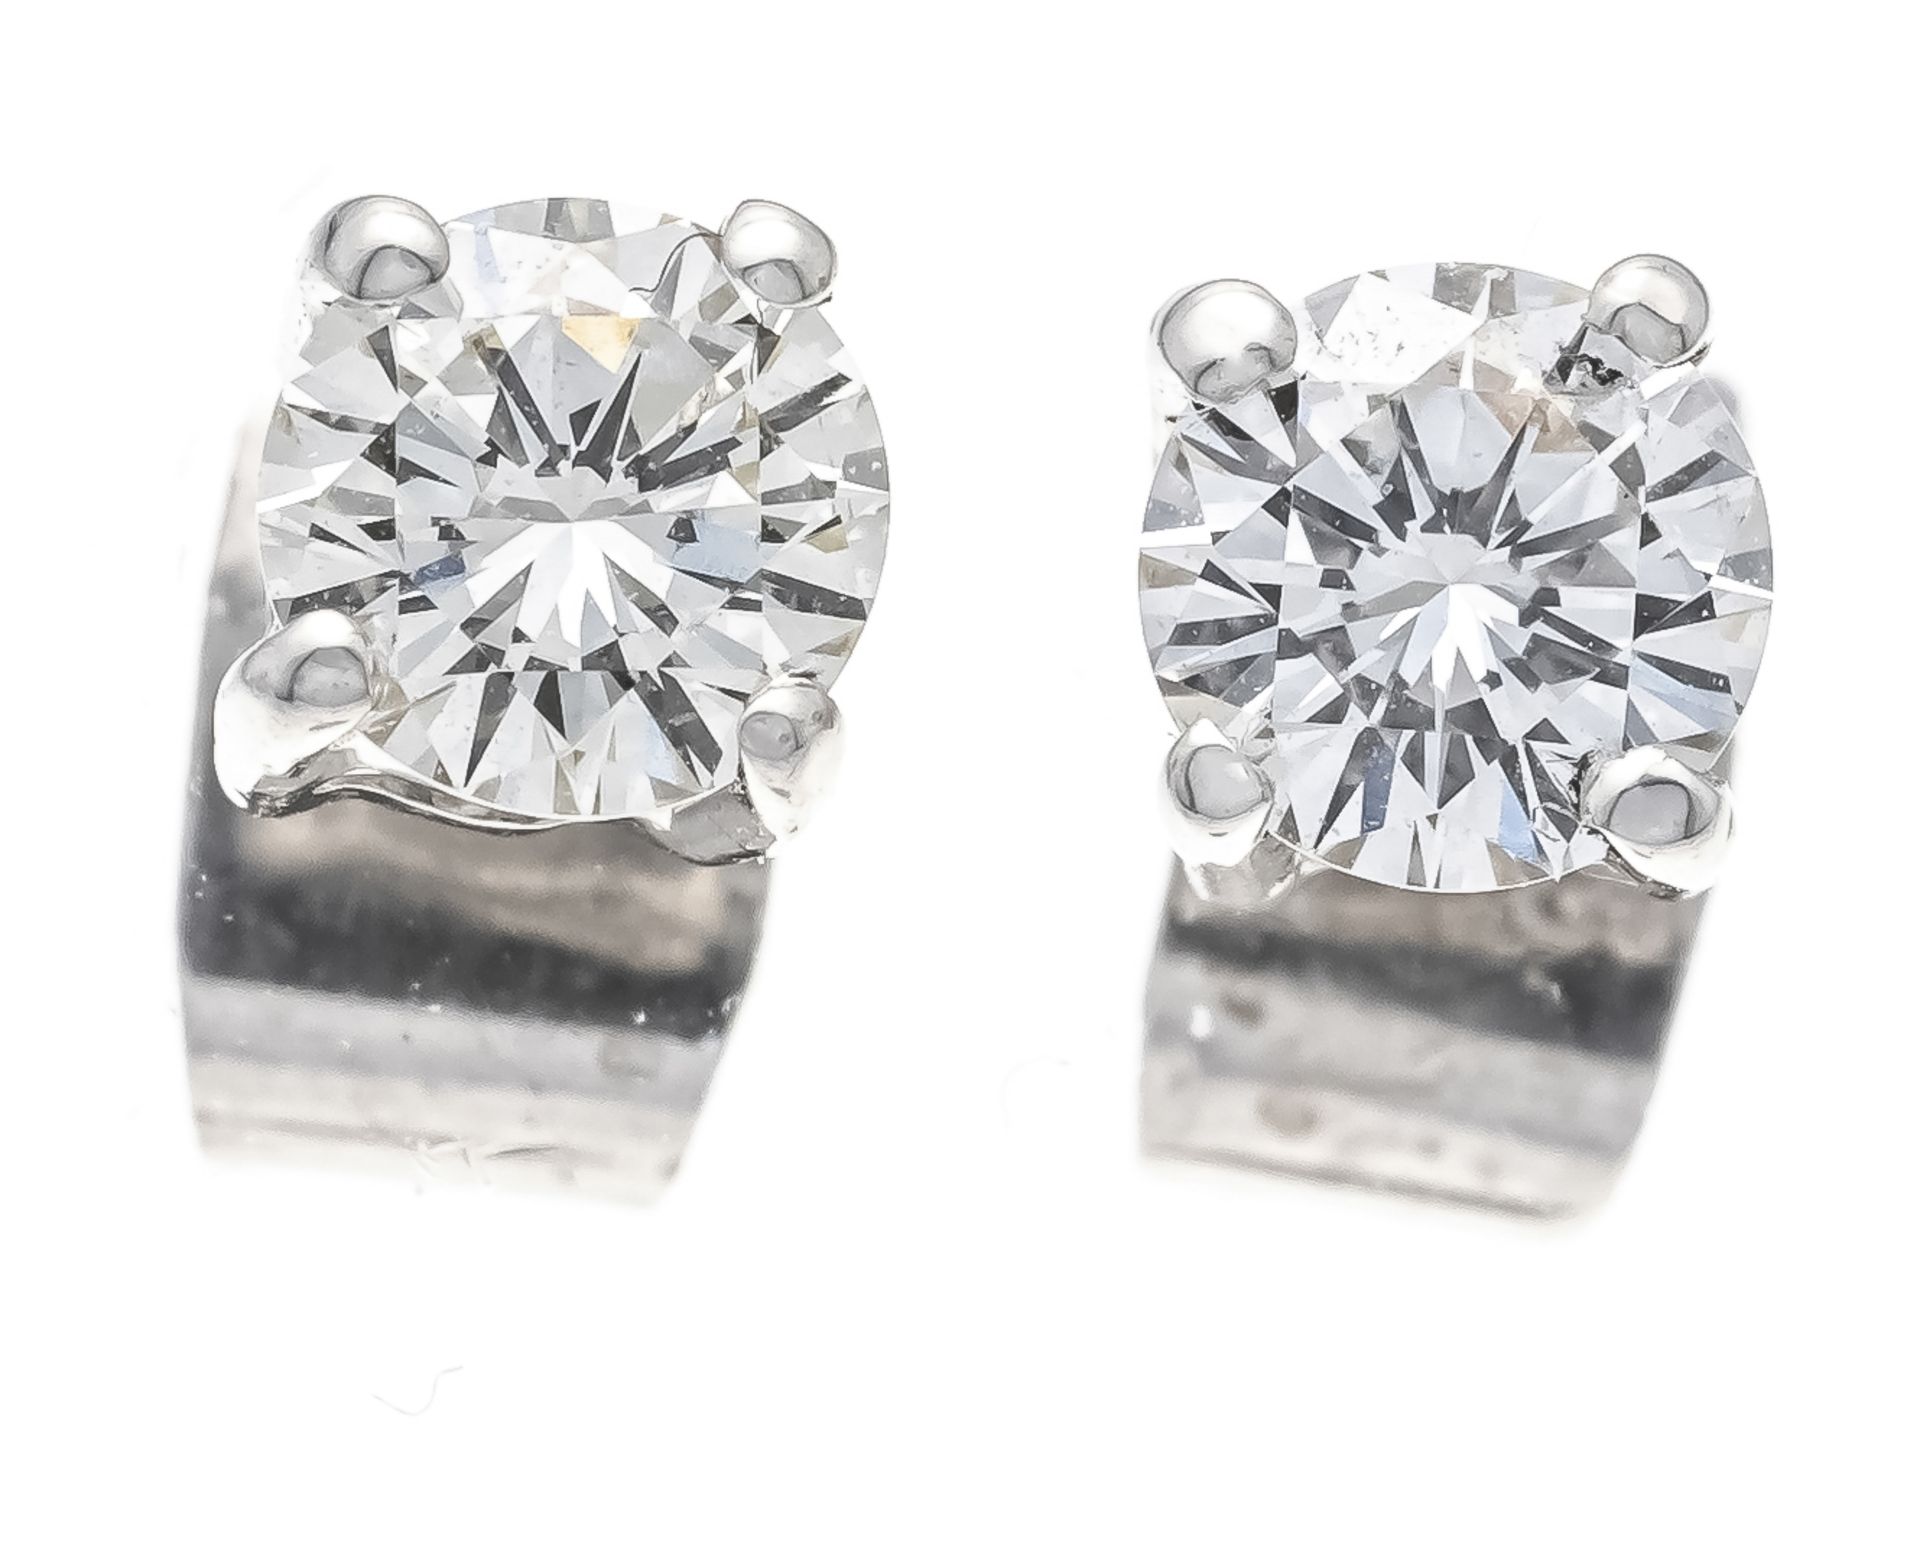 Brilliant stud earrings WG 585/000 with 2 brilliant-cut diamonds, total 0.60 ct Wesselton - slightly